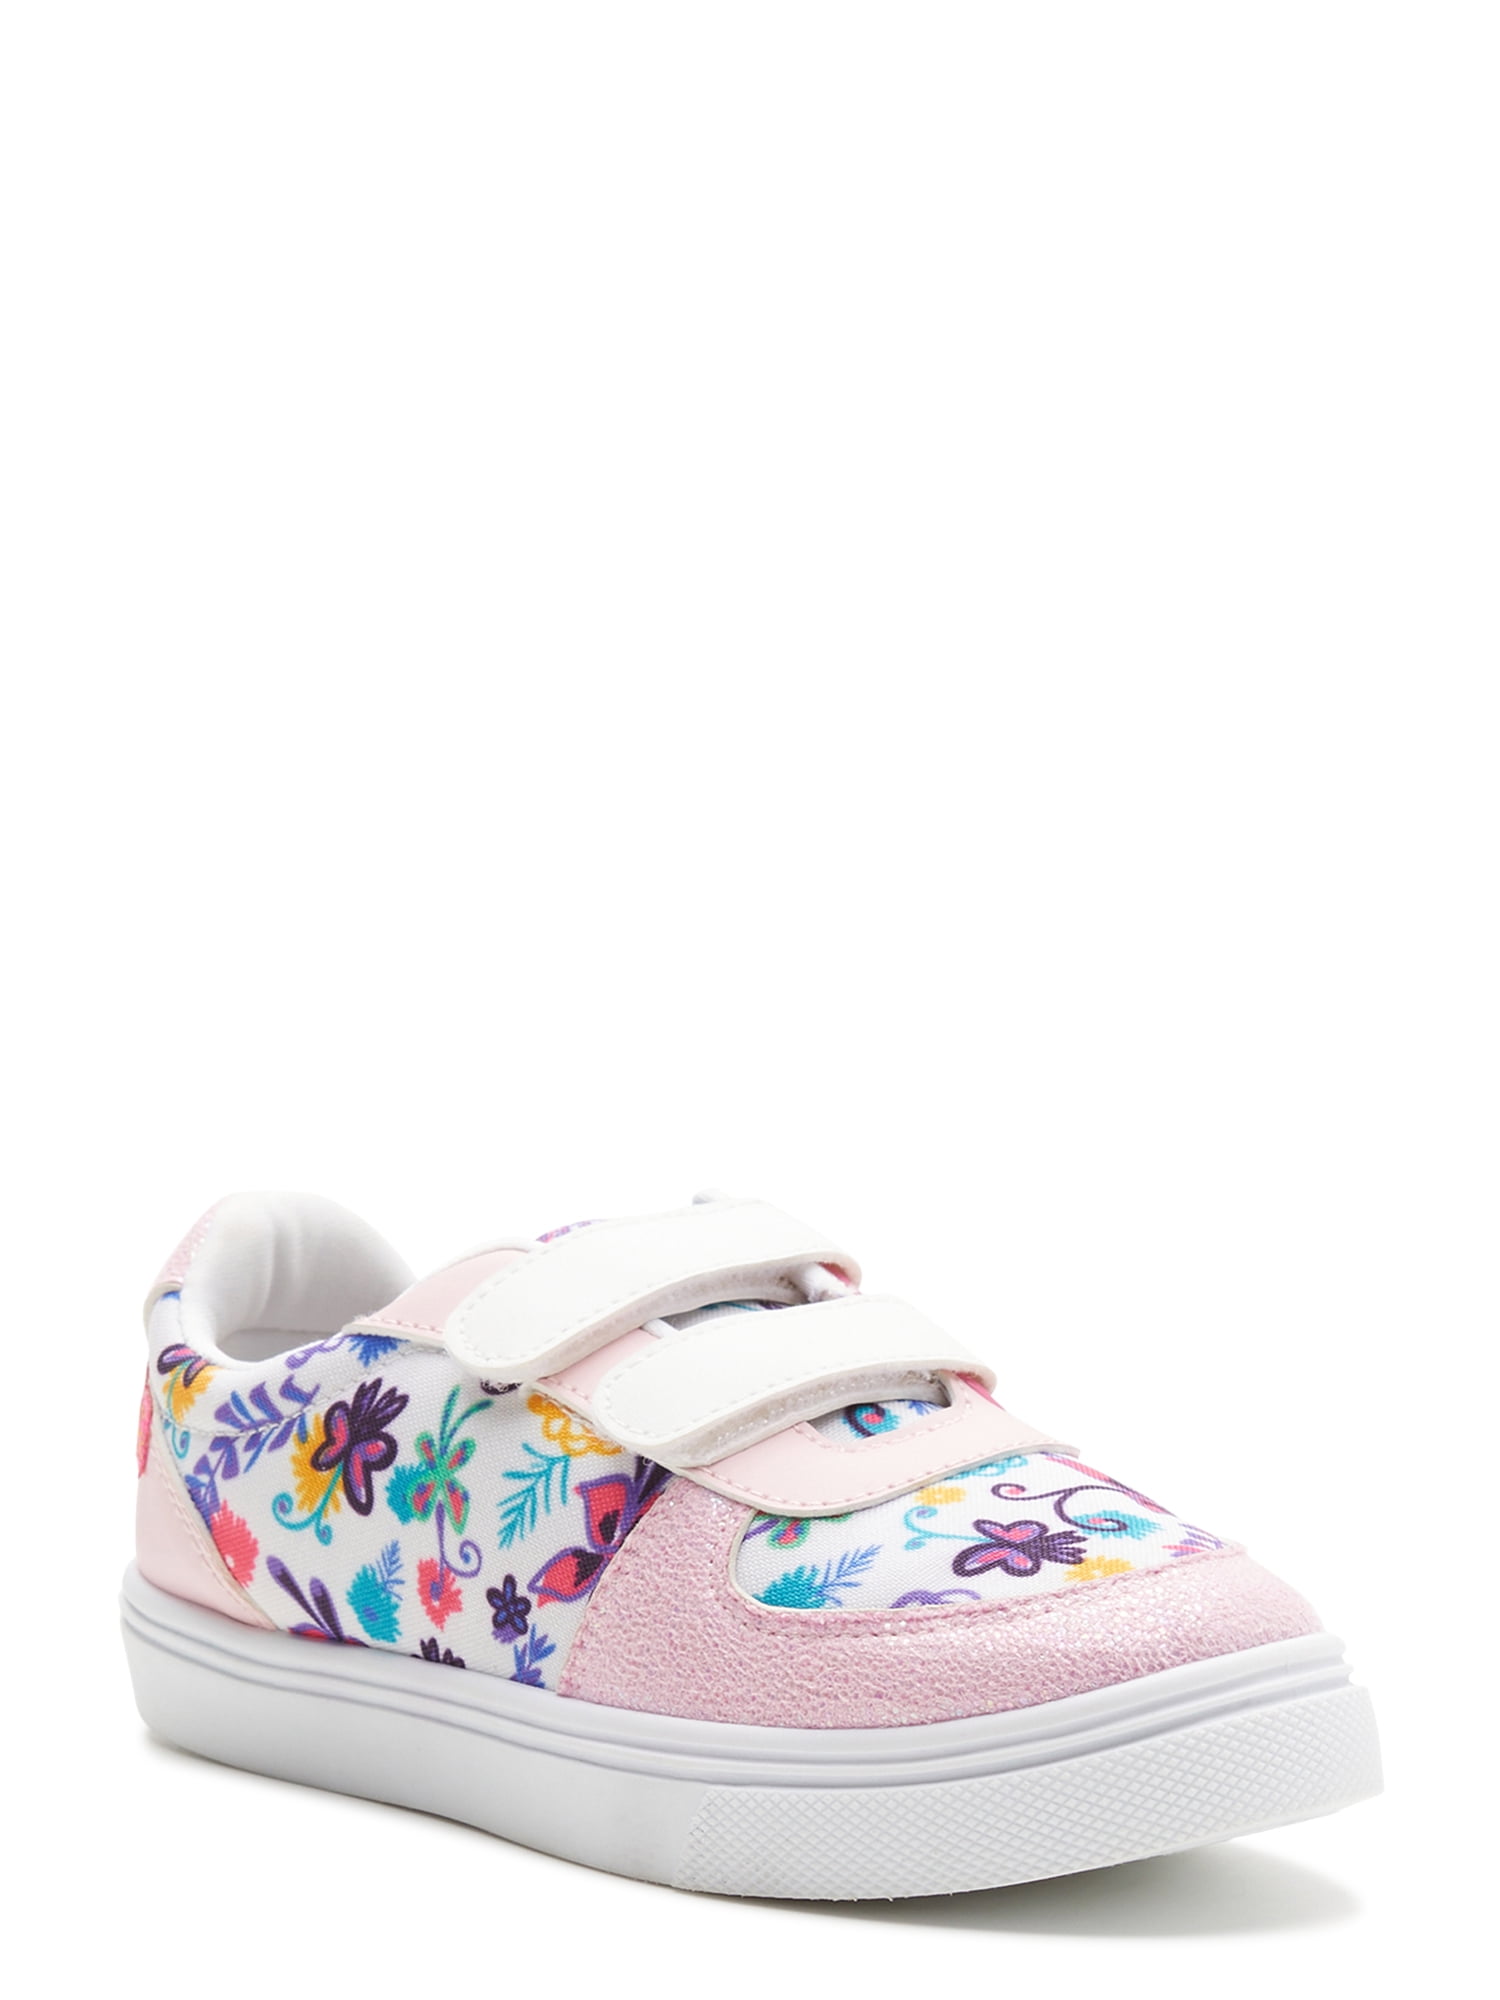 Encanto Toddler Girls Sneakers, Sizes 11-5 - Walmart.com